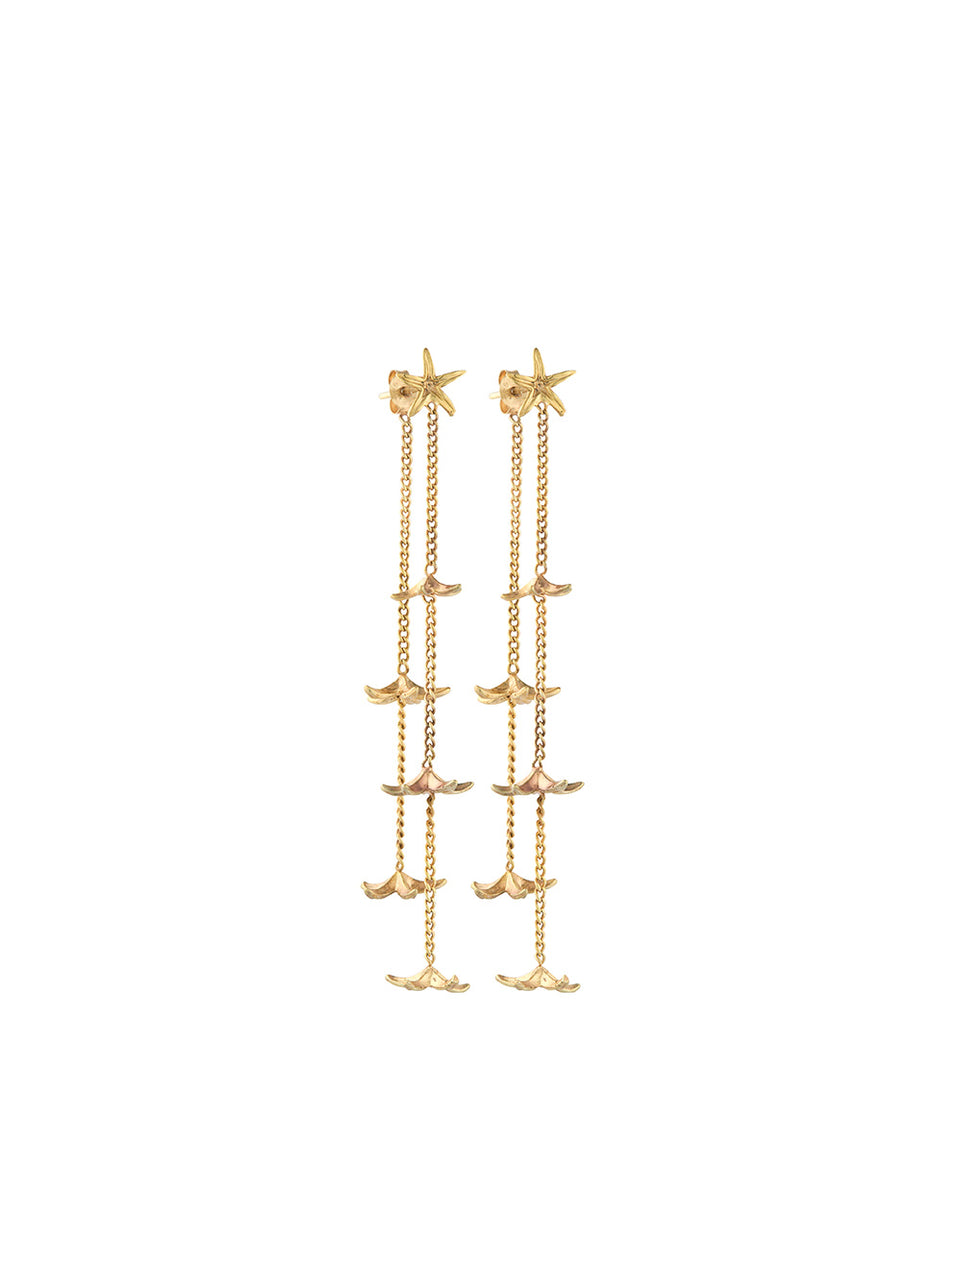 Essence Drop Earring KIVARI | Gold stud earrings with drop chain and flower details